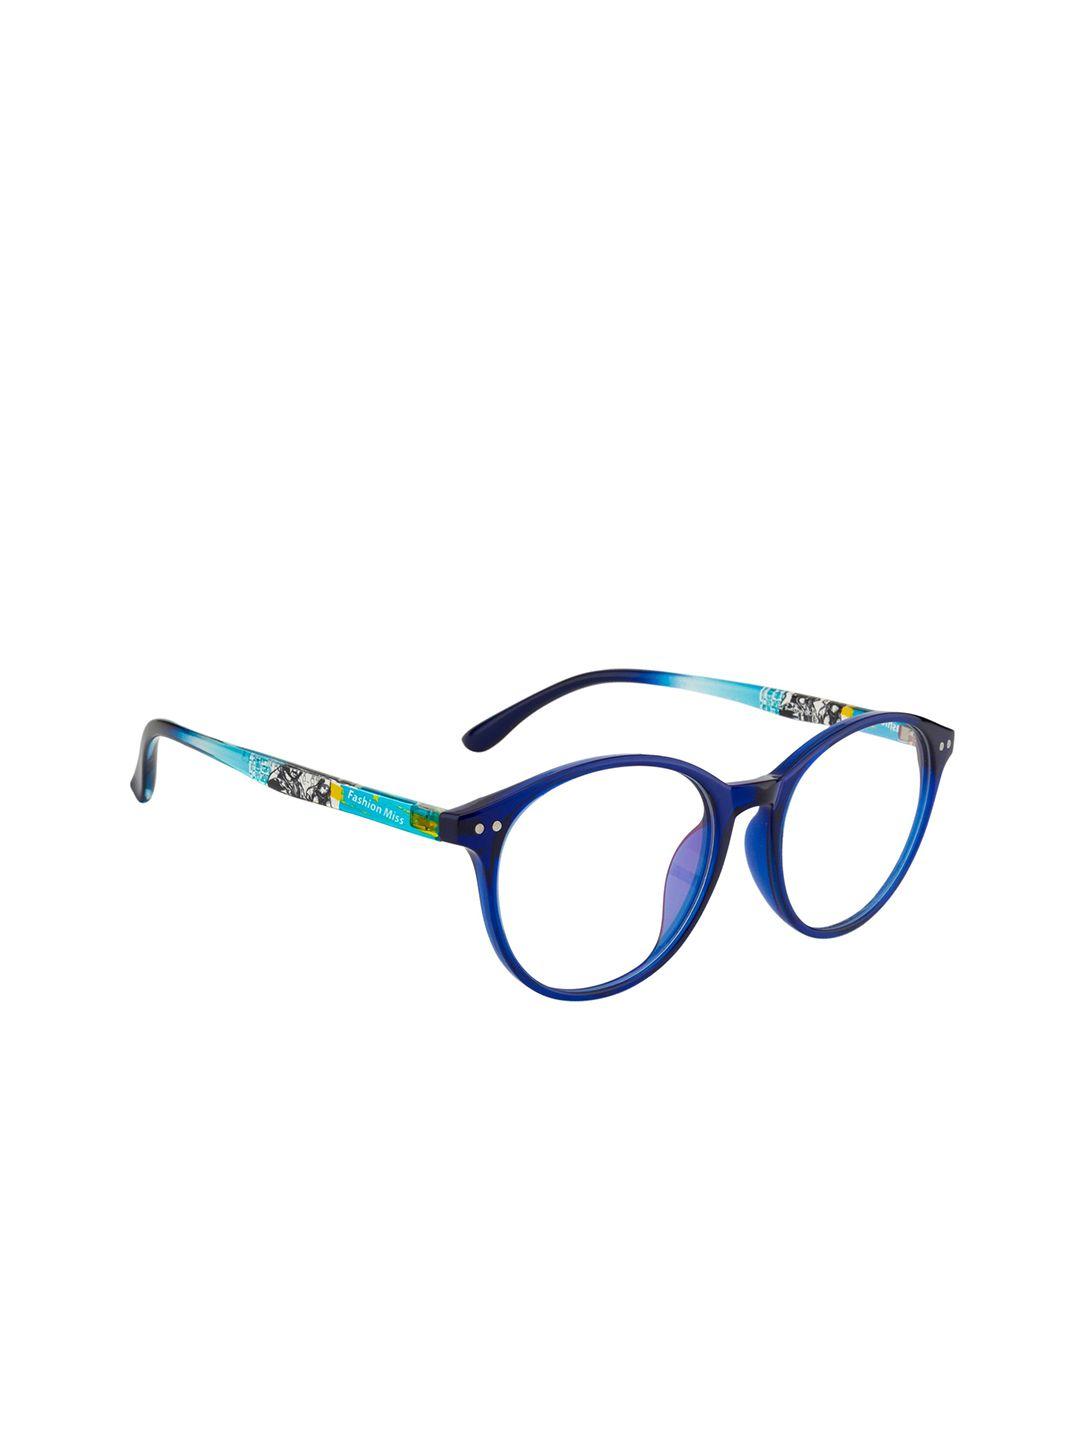 ted smith unisex blue & black full rim round frames eyeglasses